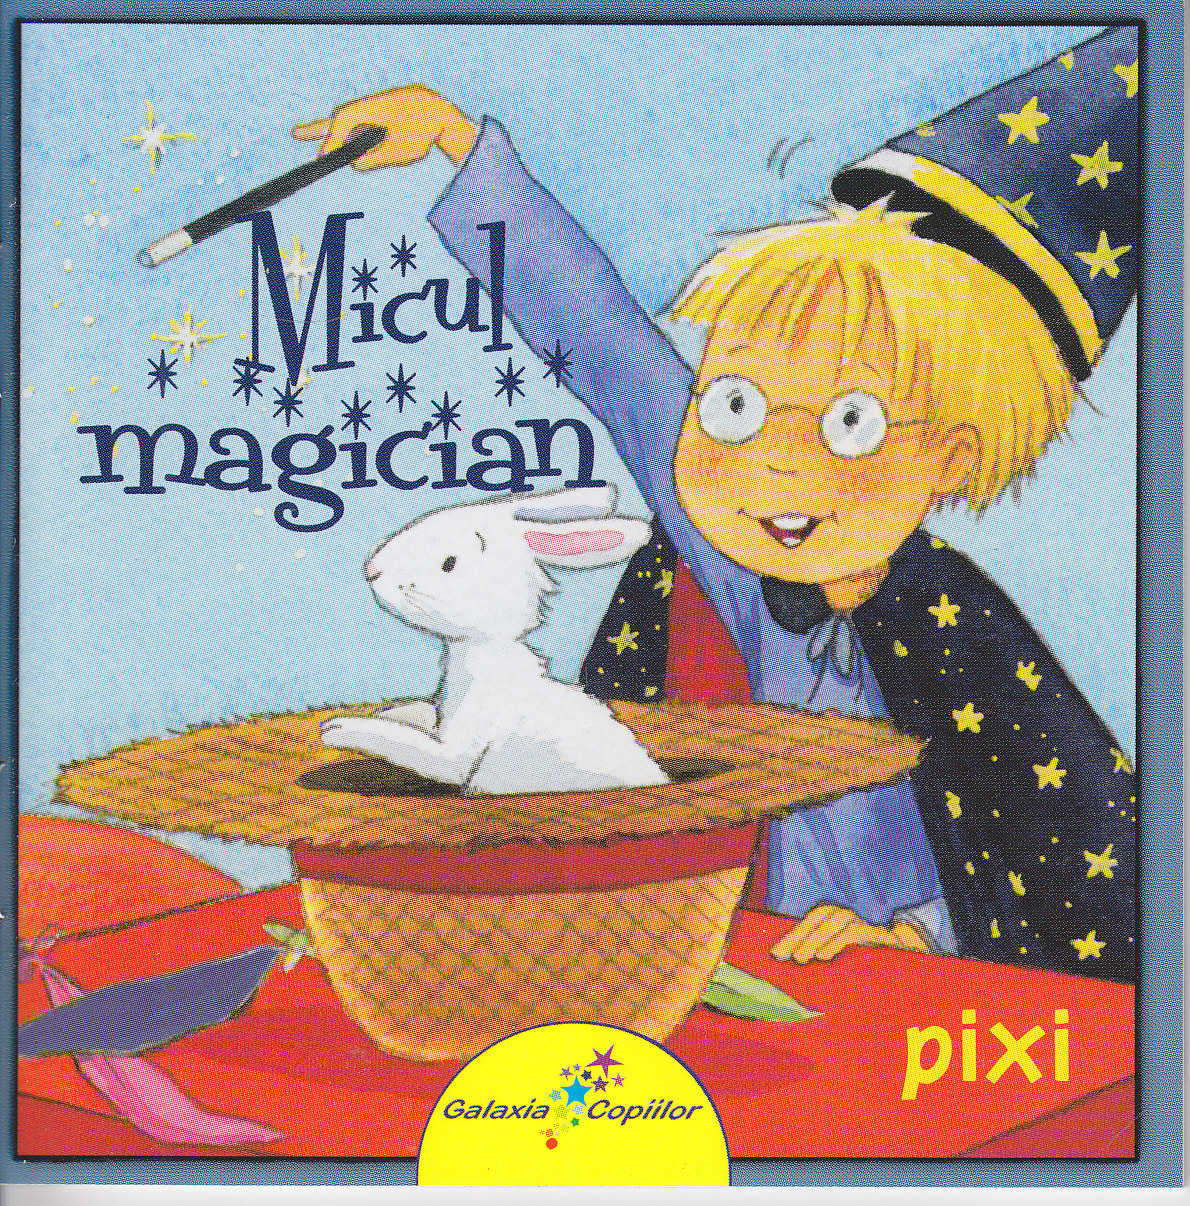 Pixi - Micul magician